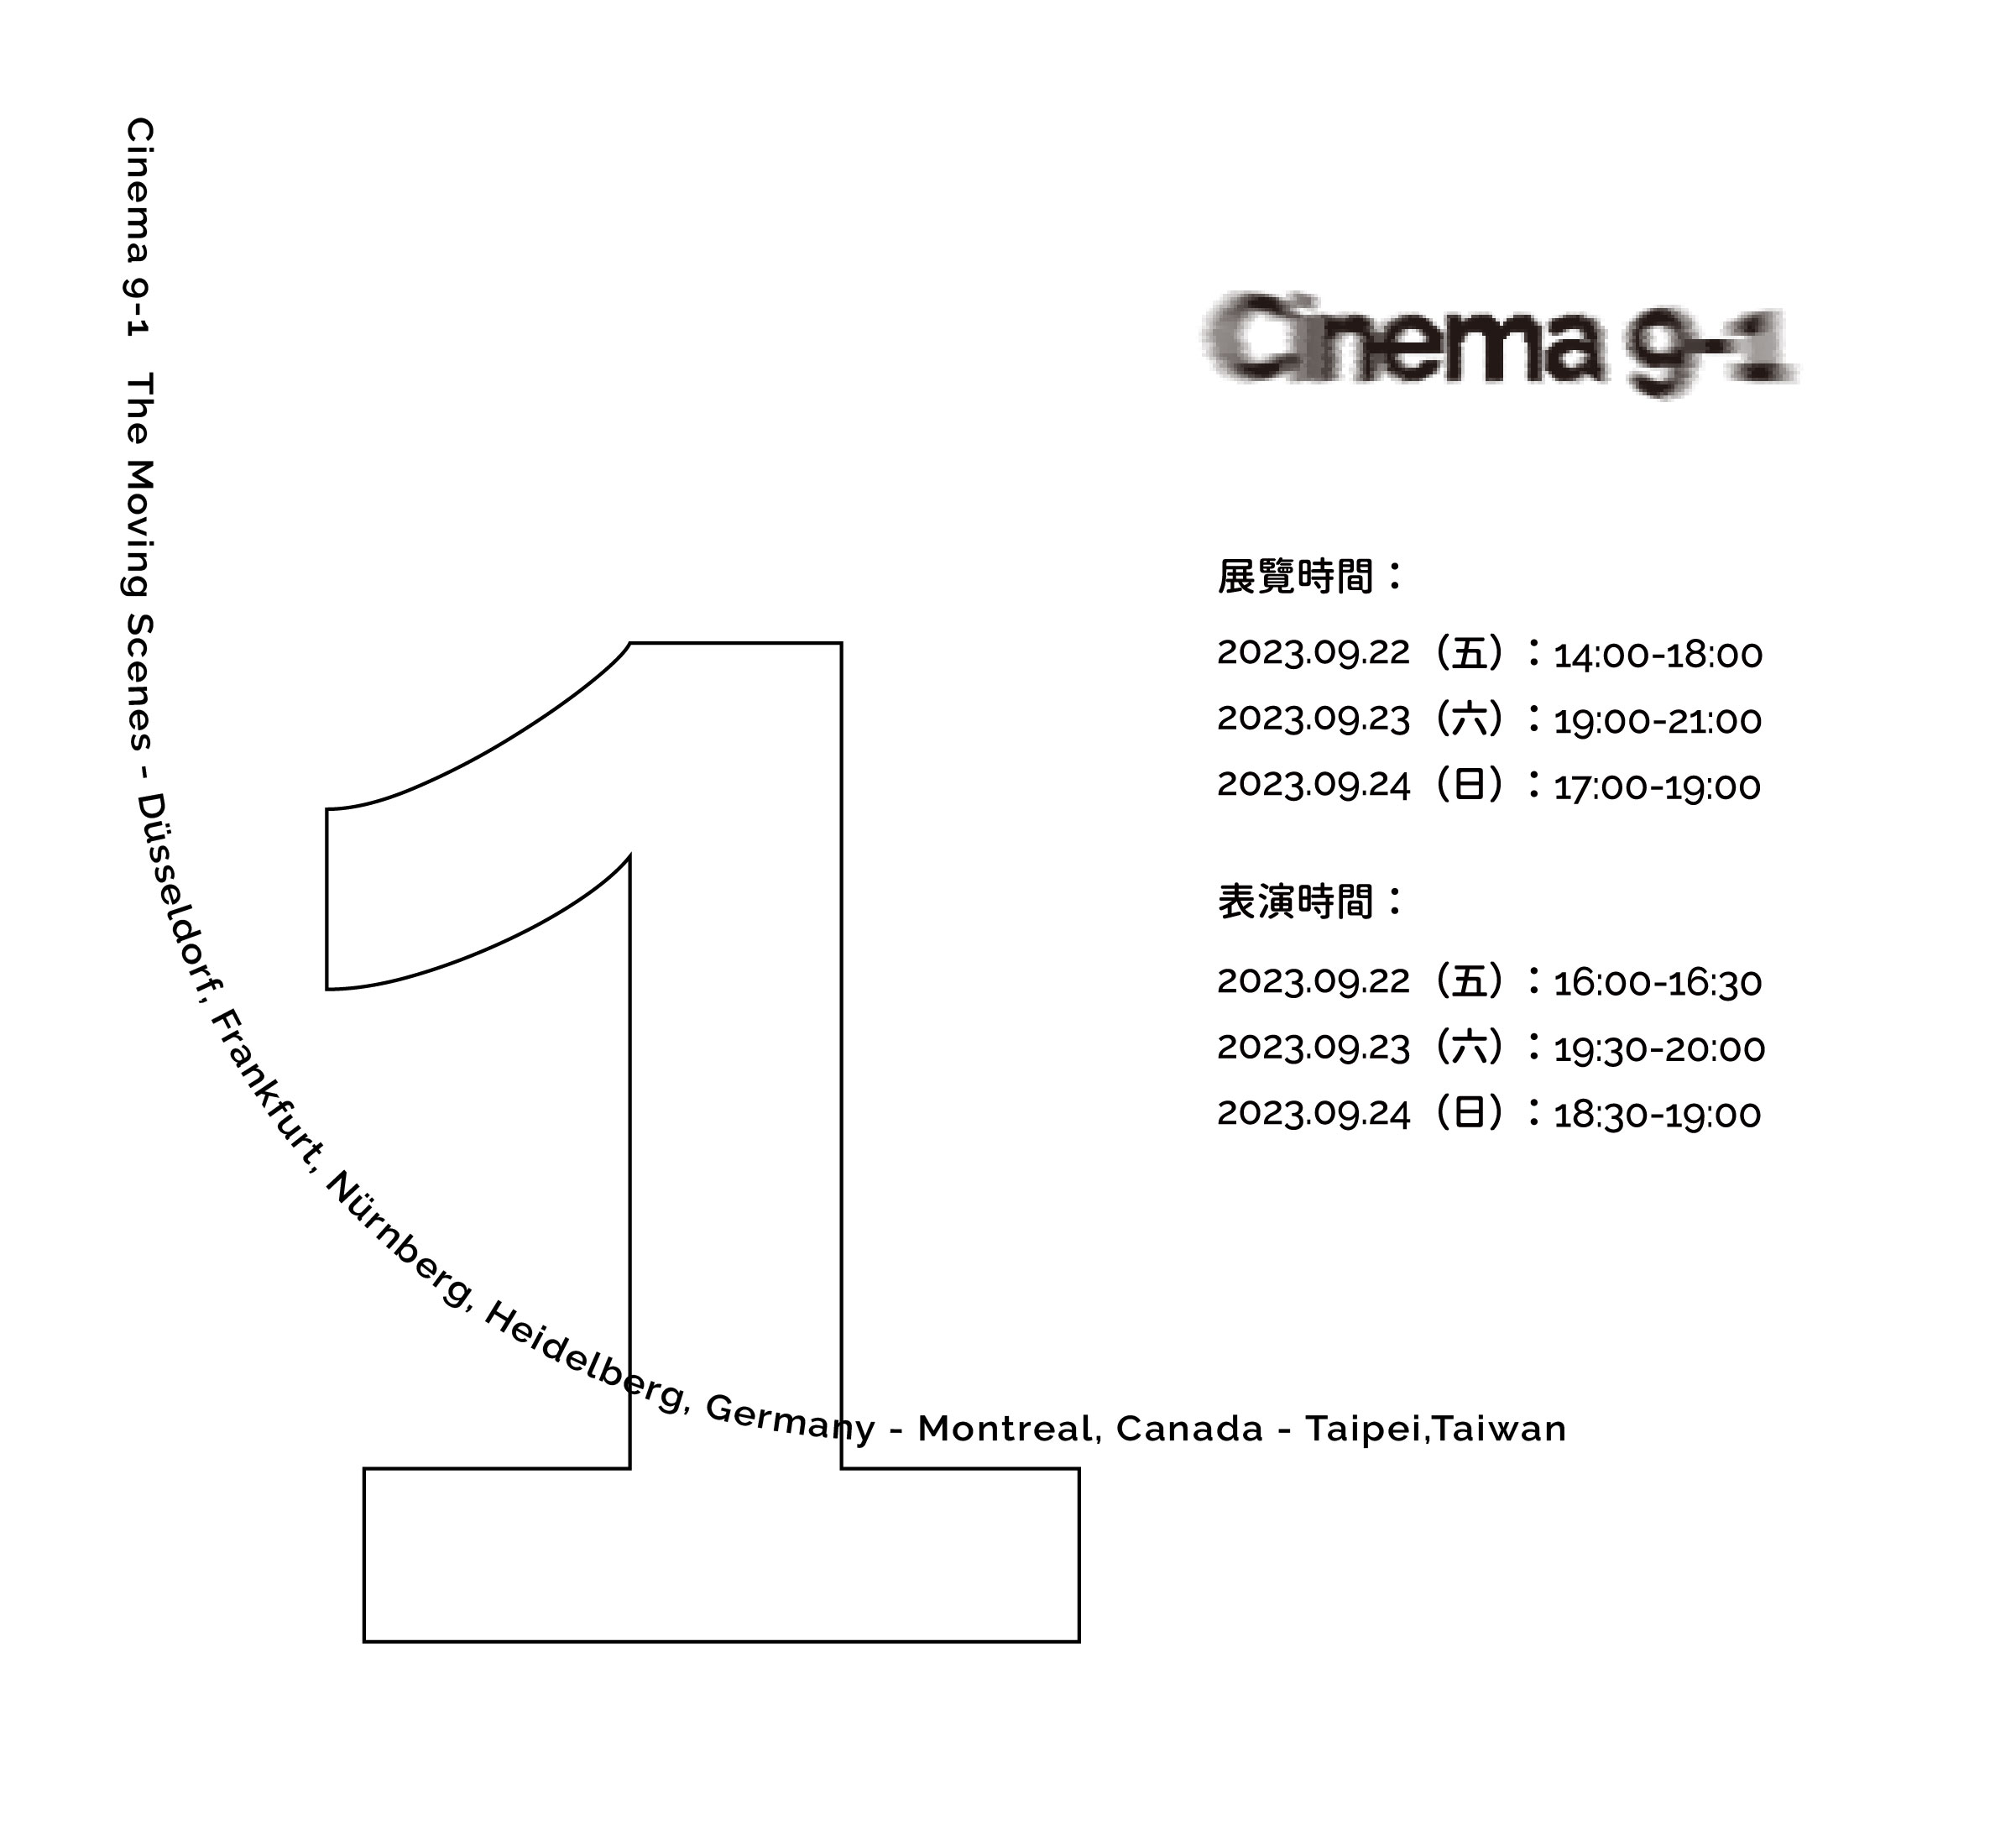 Exhibition 'Cinema 9-1' poster, Countdown day 1.